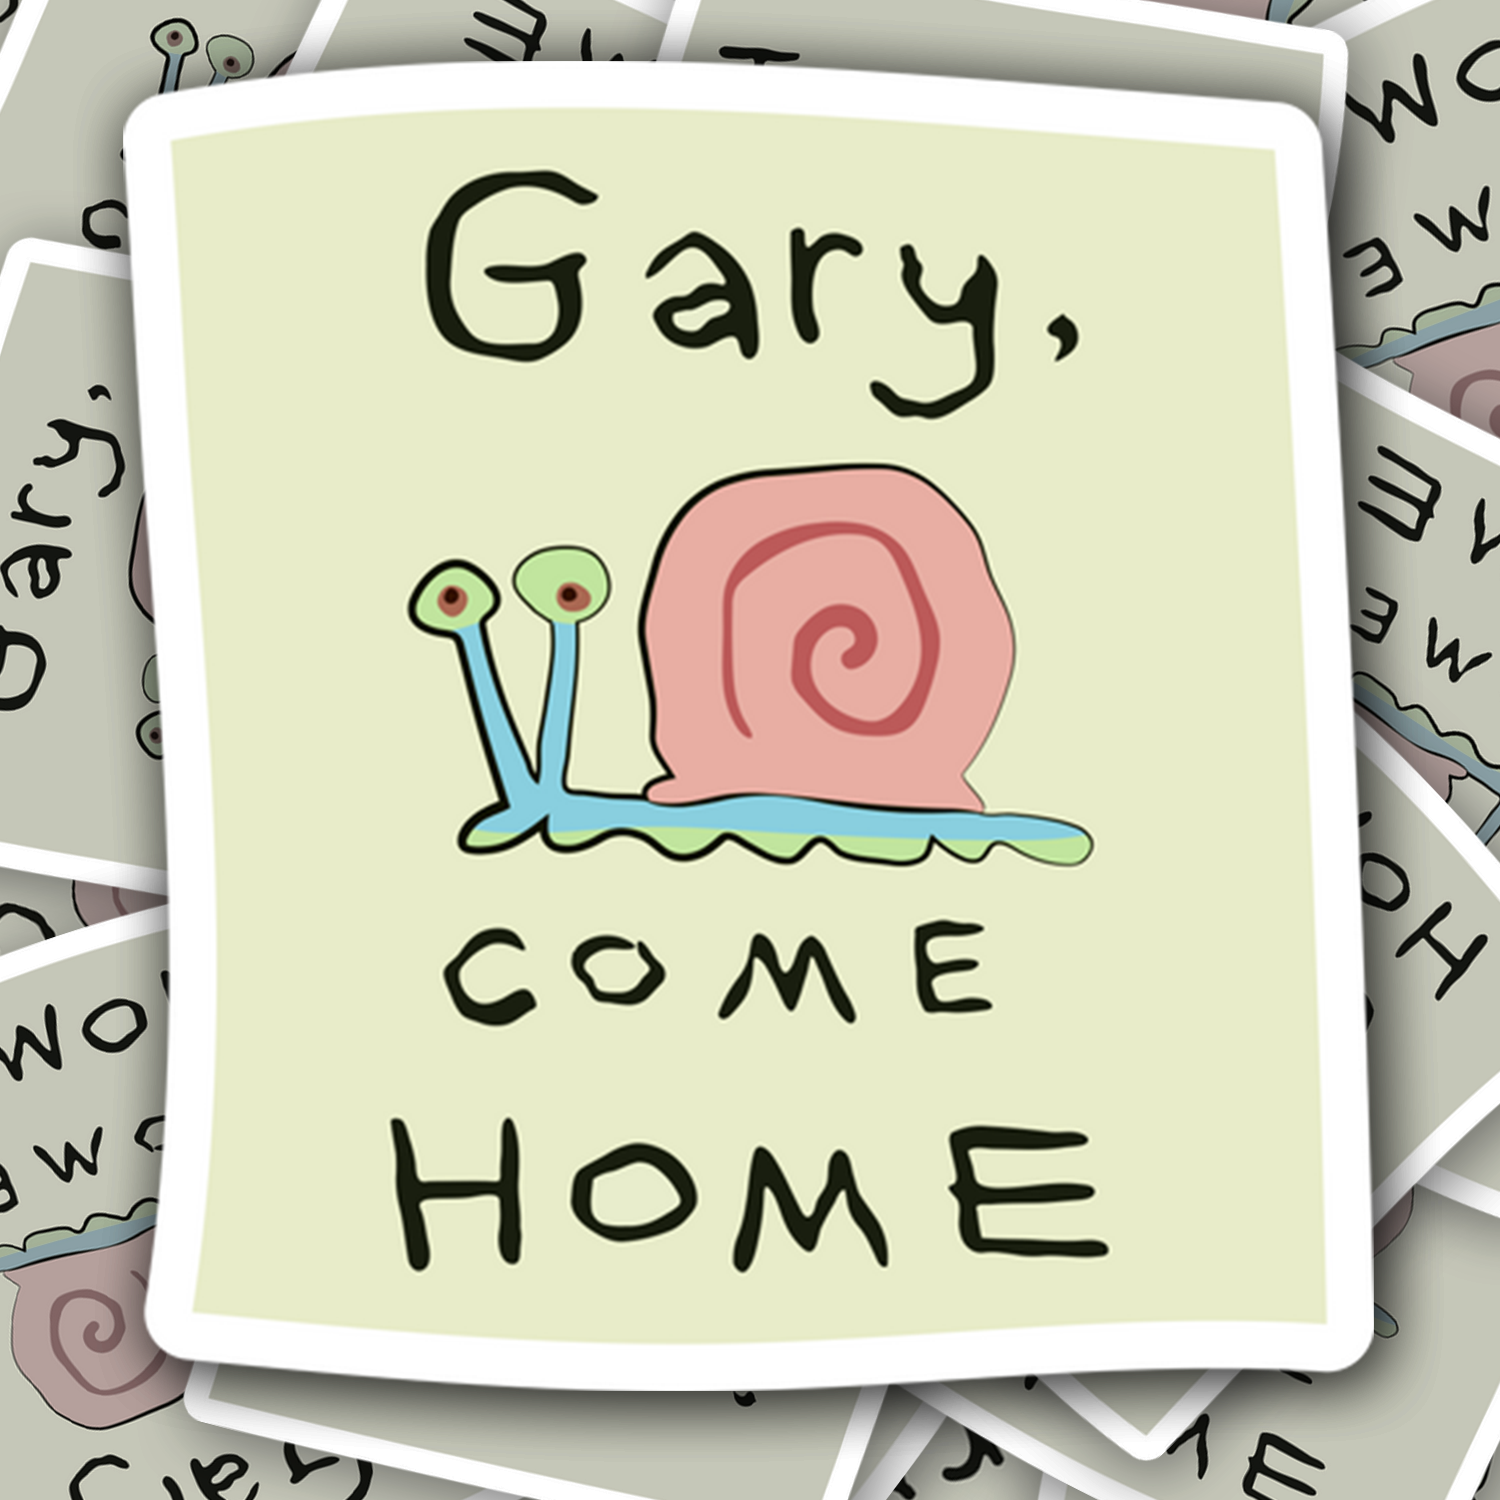 Gary Come Home Meme Sticker - Turbo Vinyl